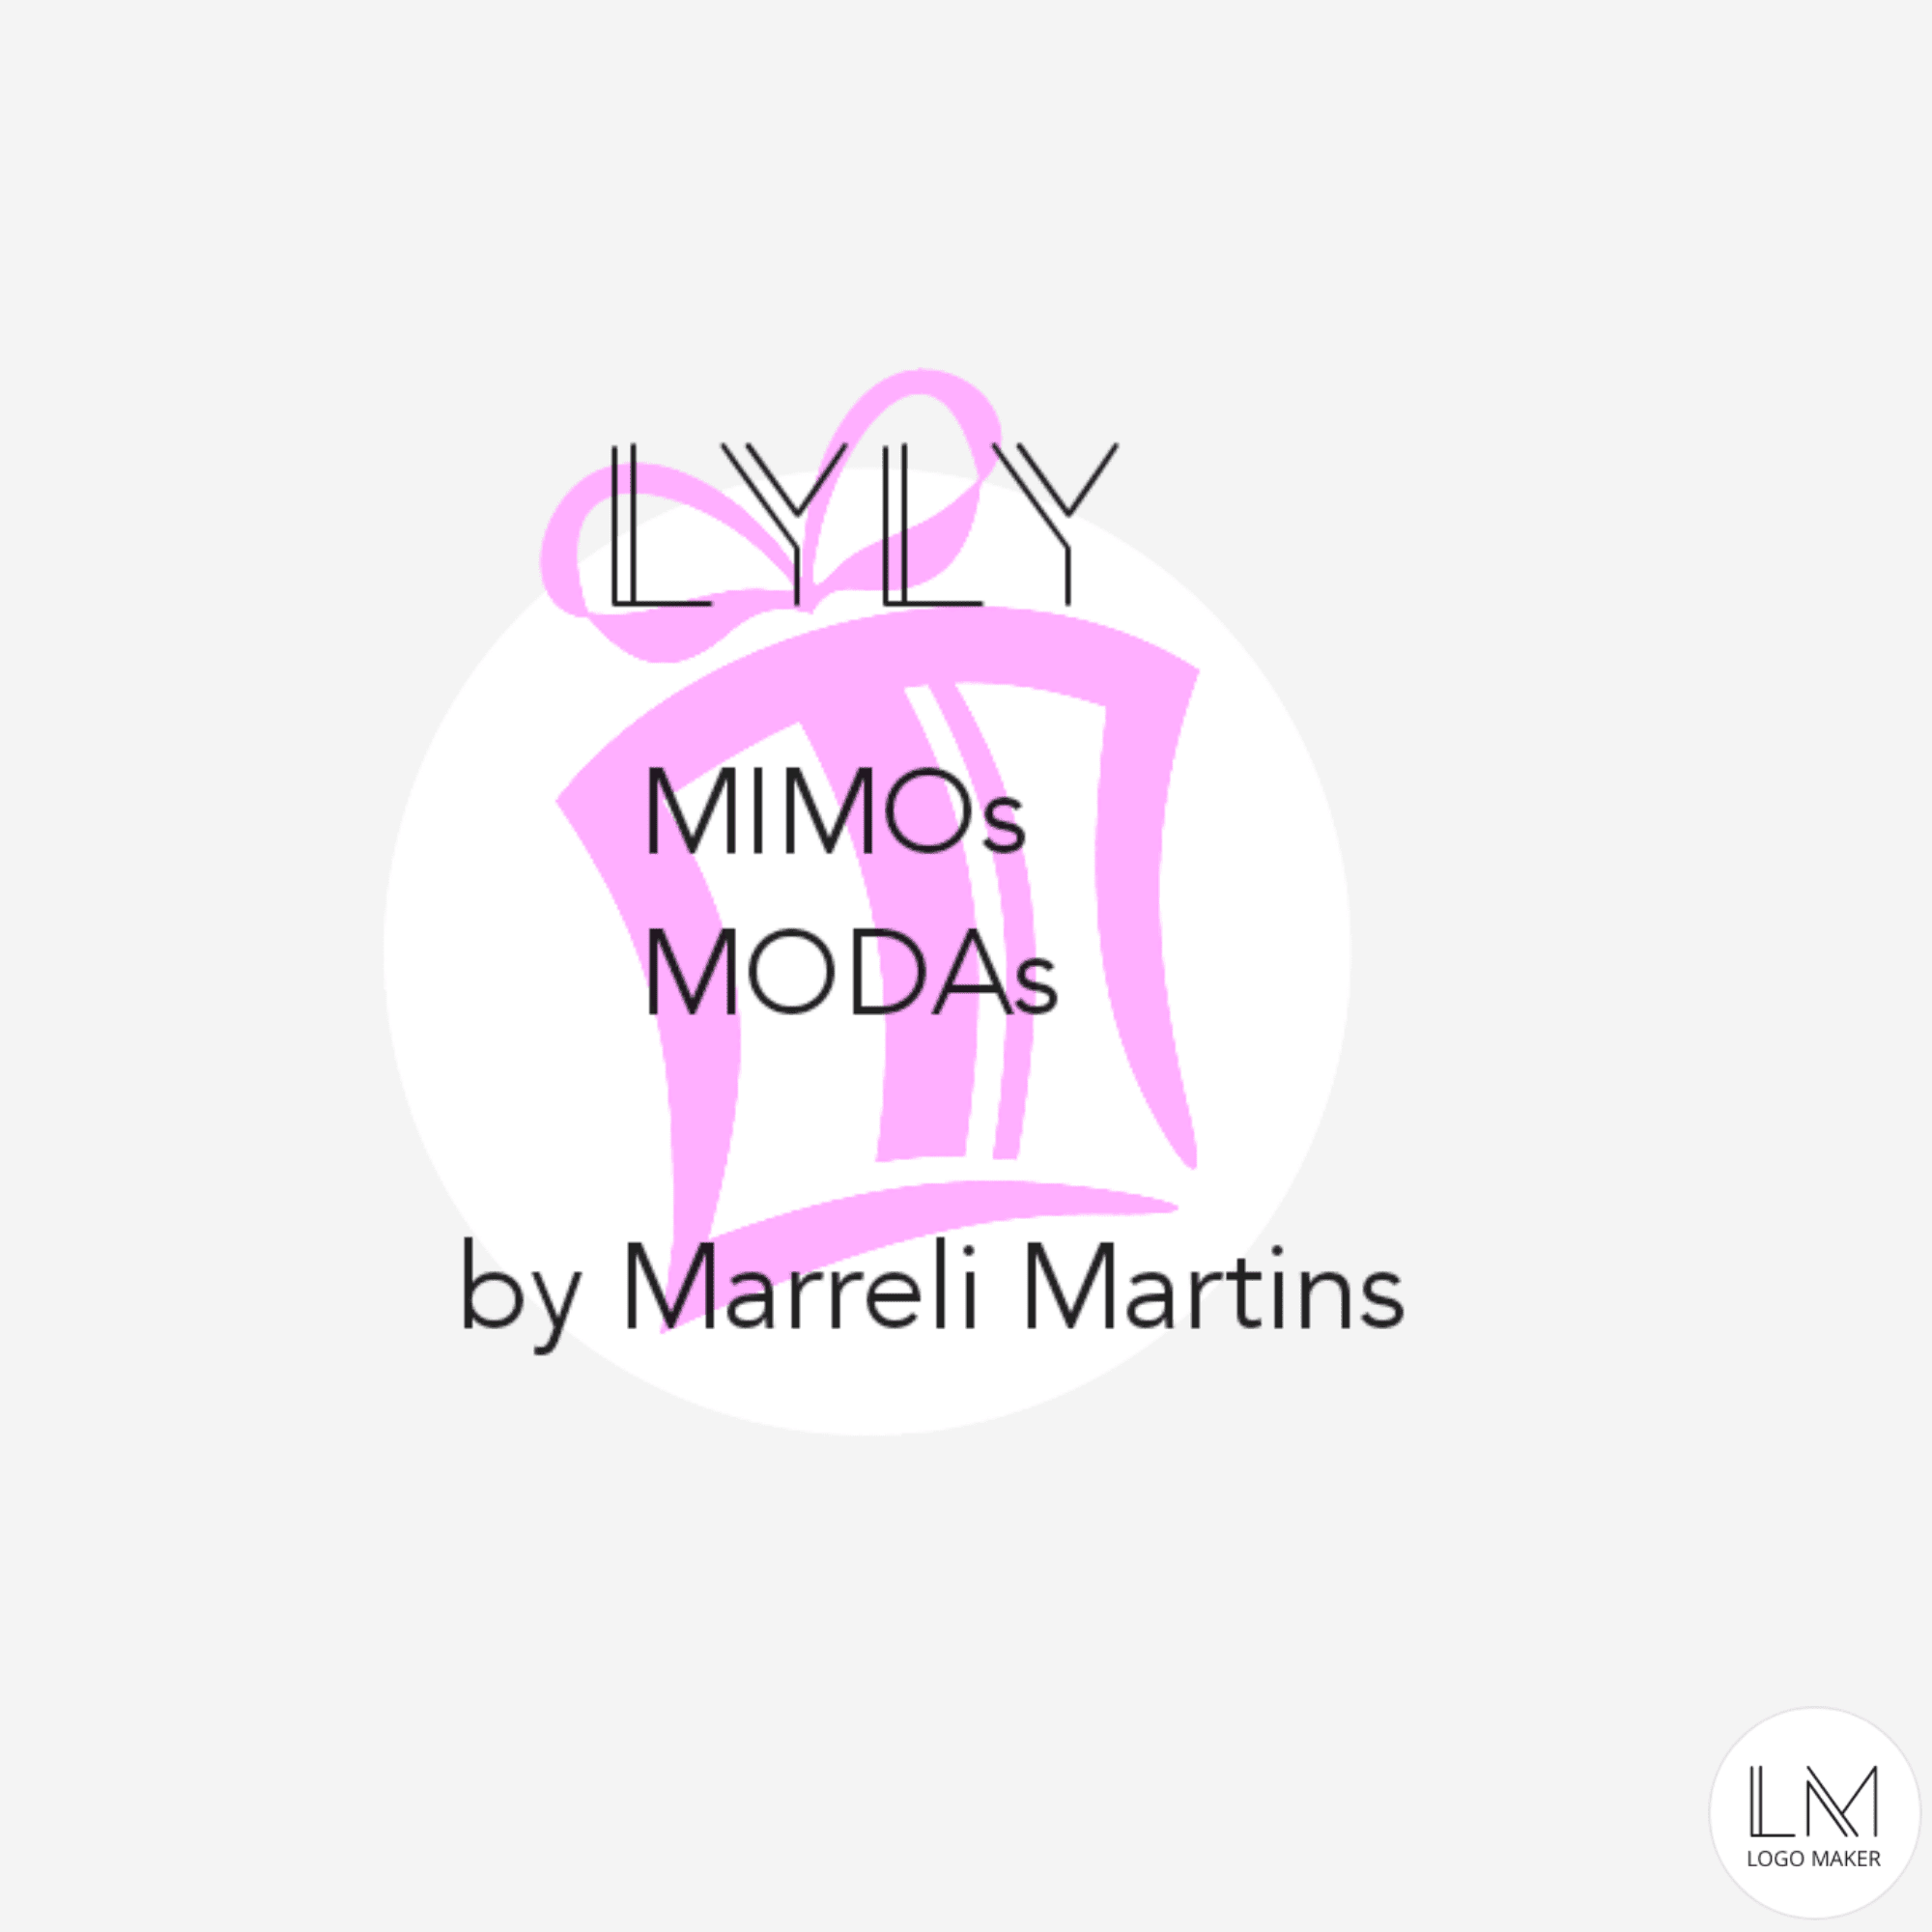 Mimos LYLY